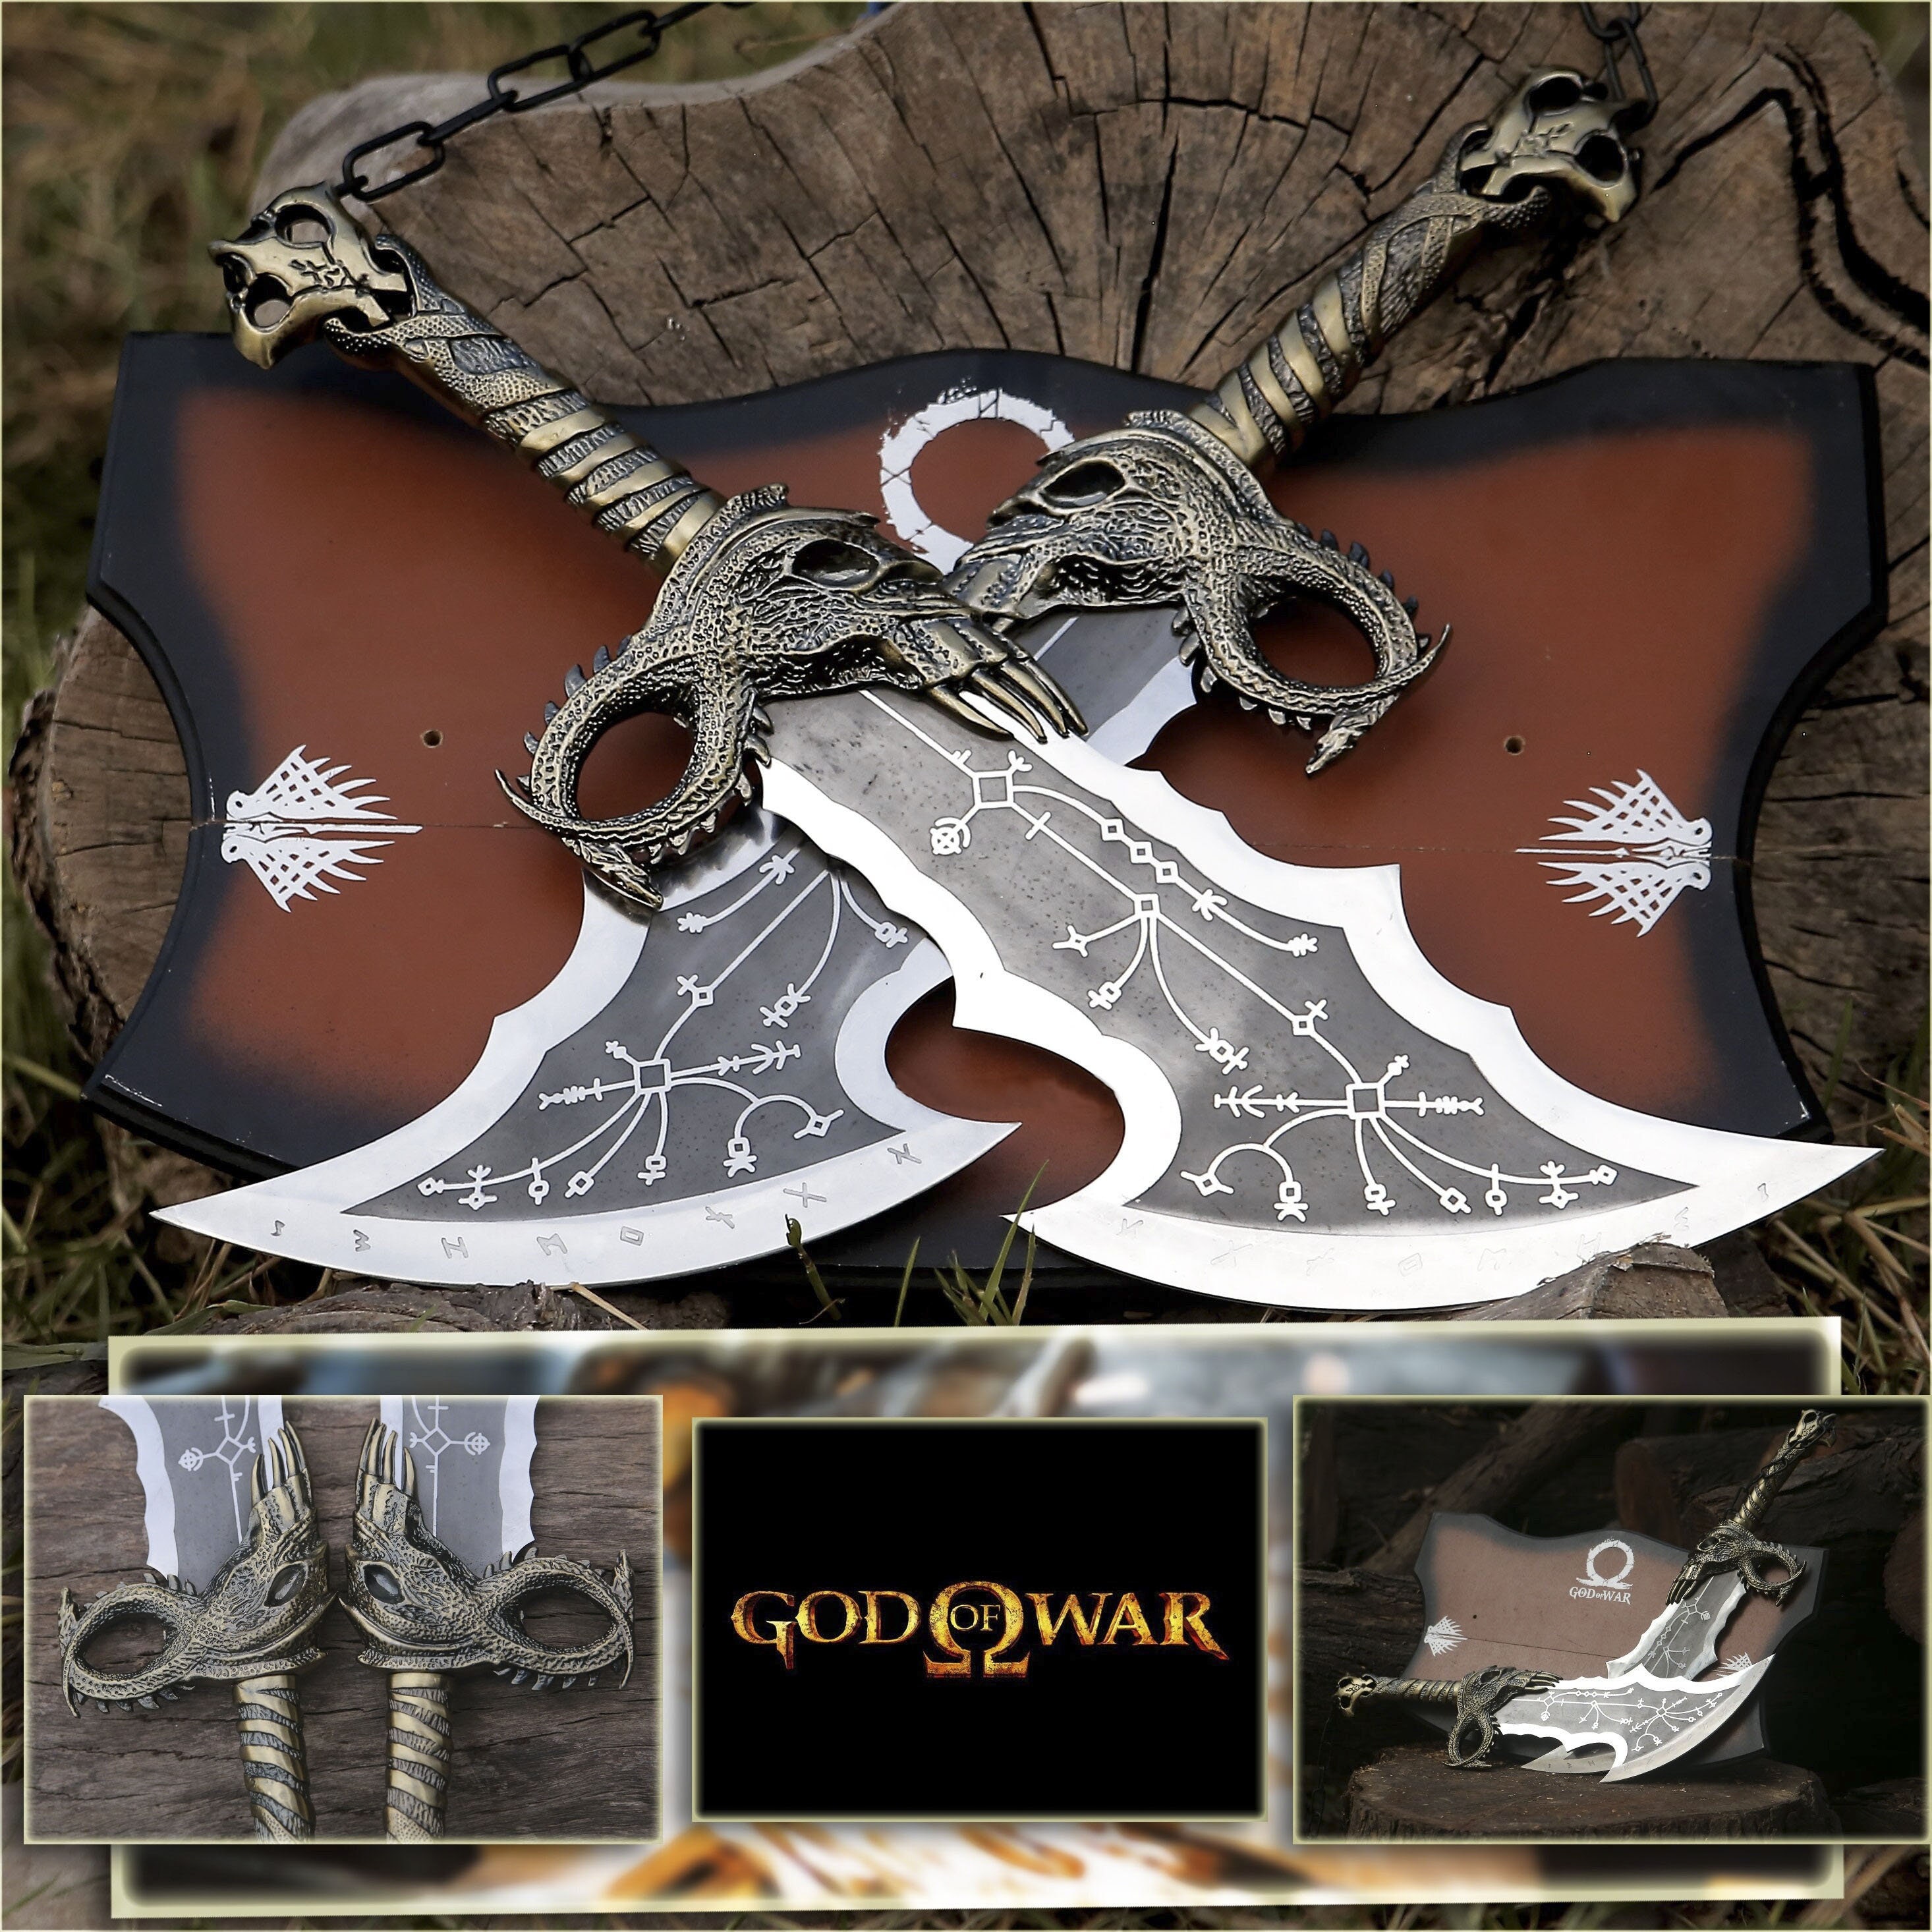 GodWar4 Kratos Weapon Blade of Olympus Keychain Keyring Cosplay